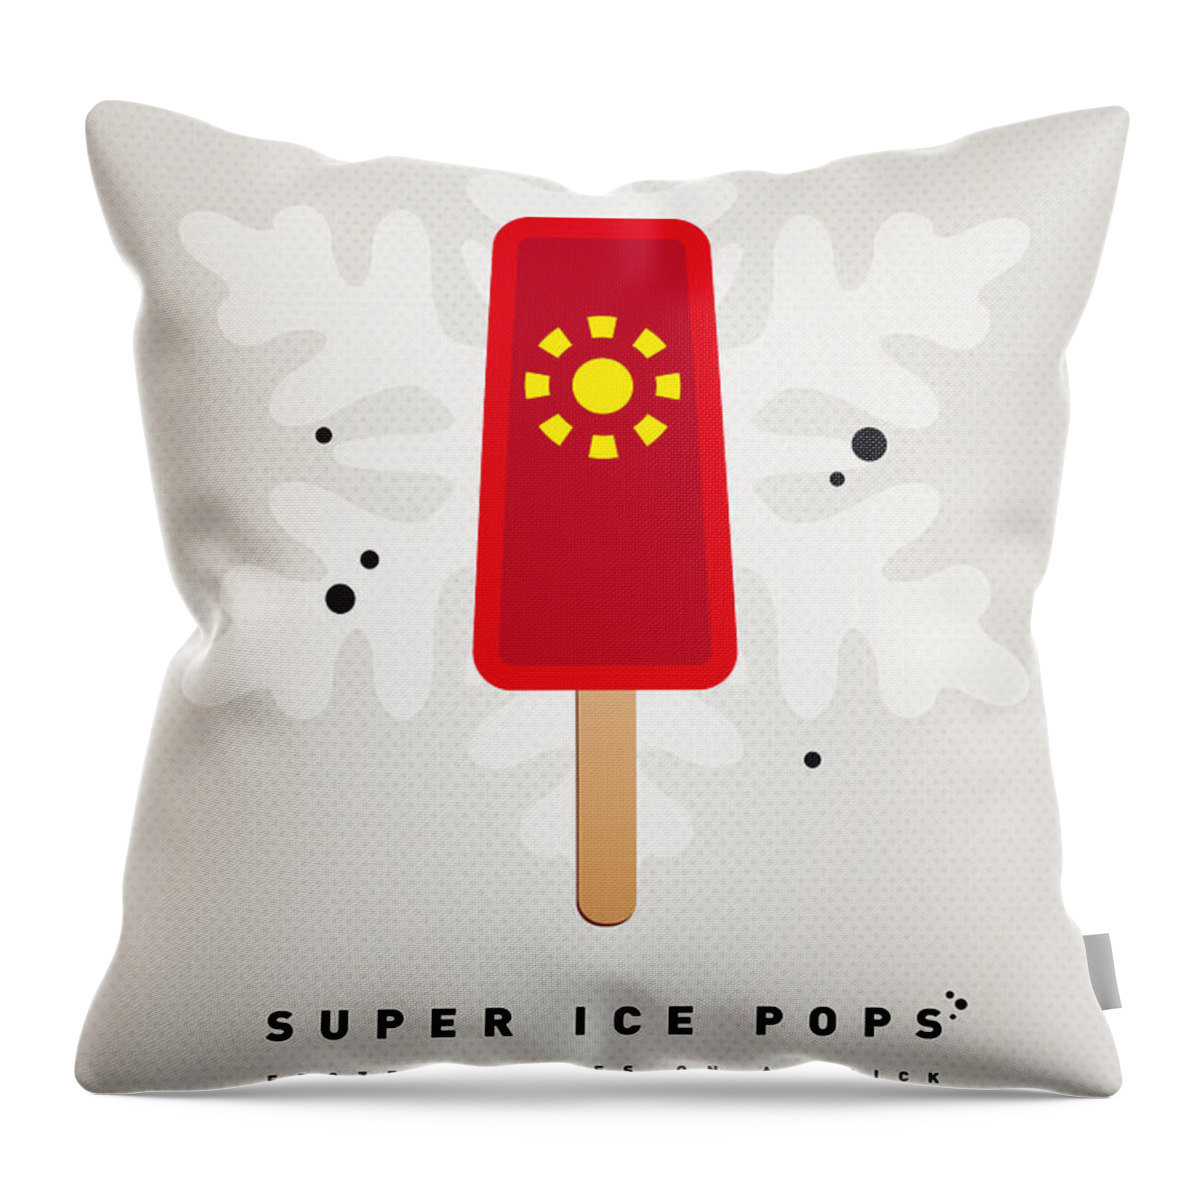 Superheroes Throw Pillow featuring the digital art My SUPERHERO ICE POP - Iron Man by Chungkong Art